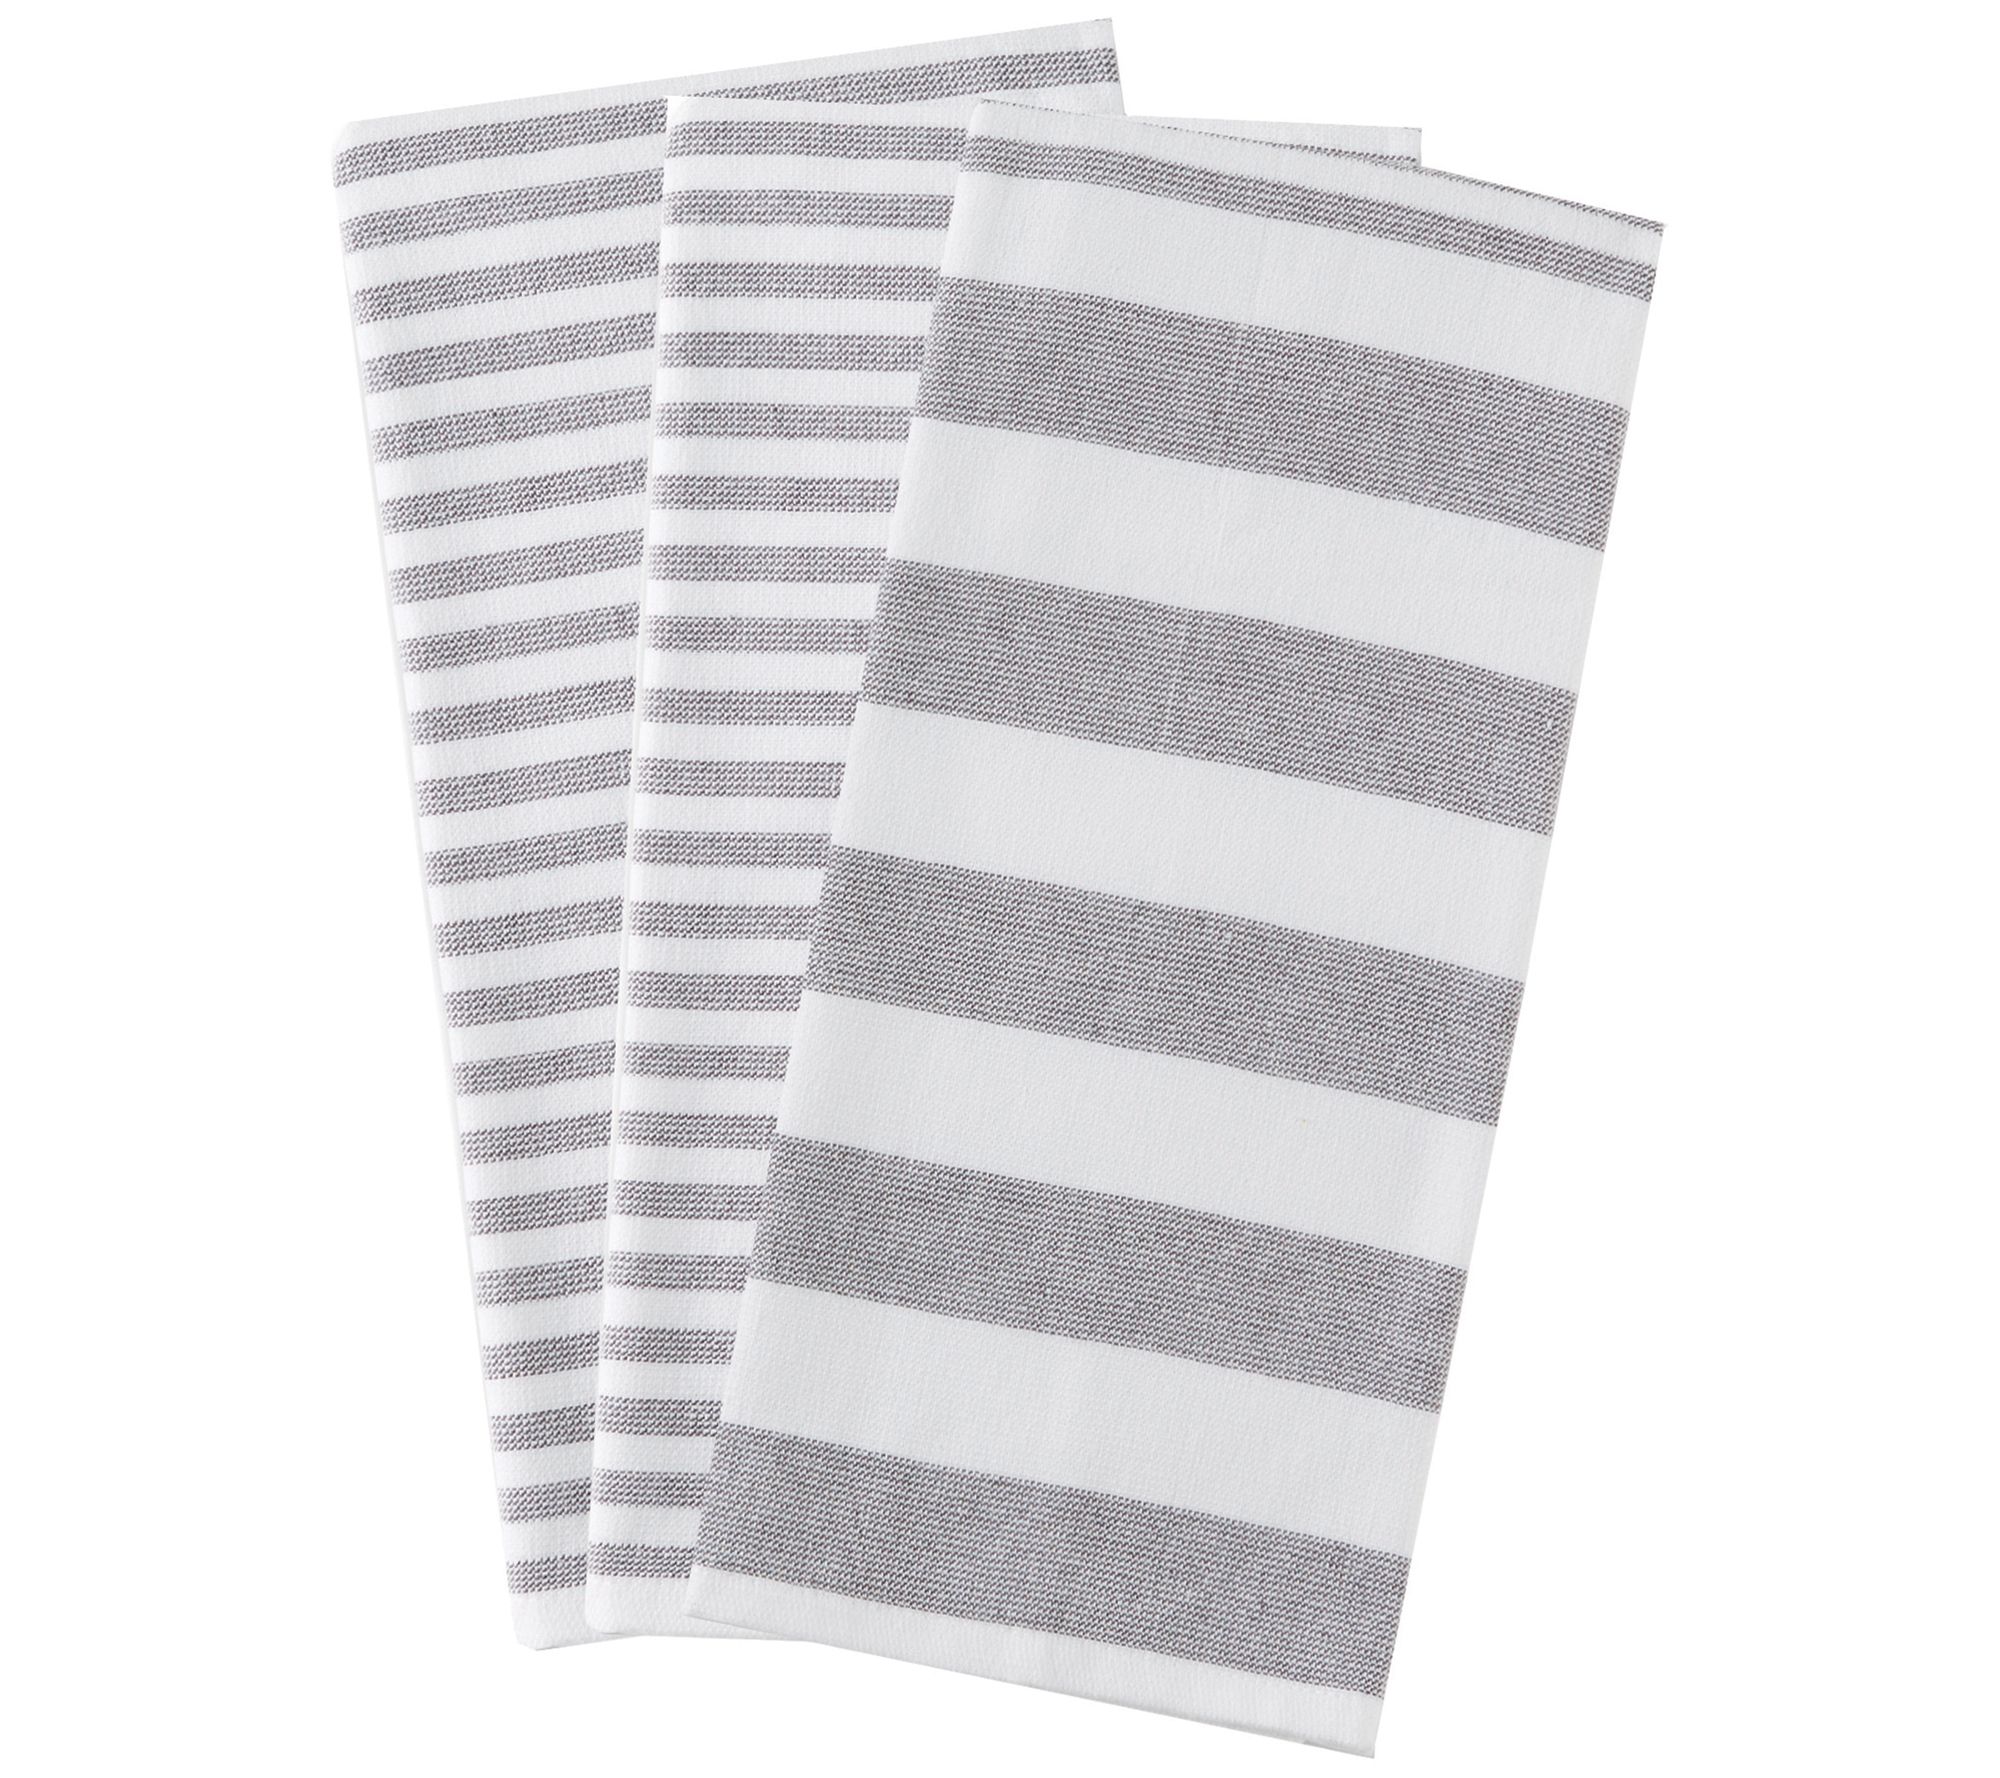 Design Imports White Bar Mop Dishtowel & Dishcloth Set of 8